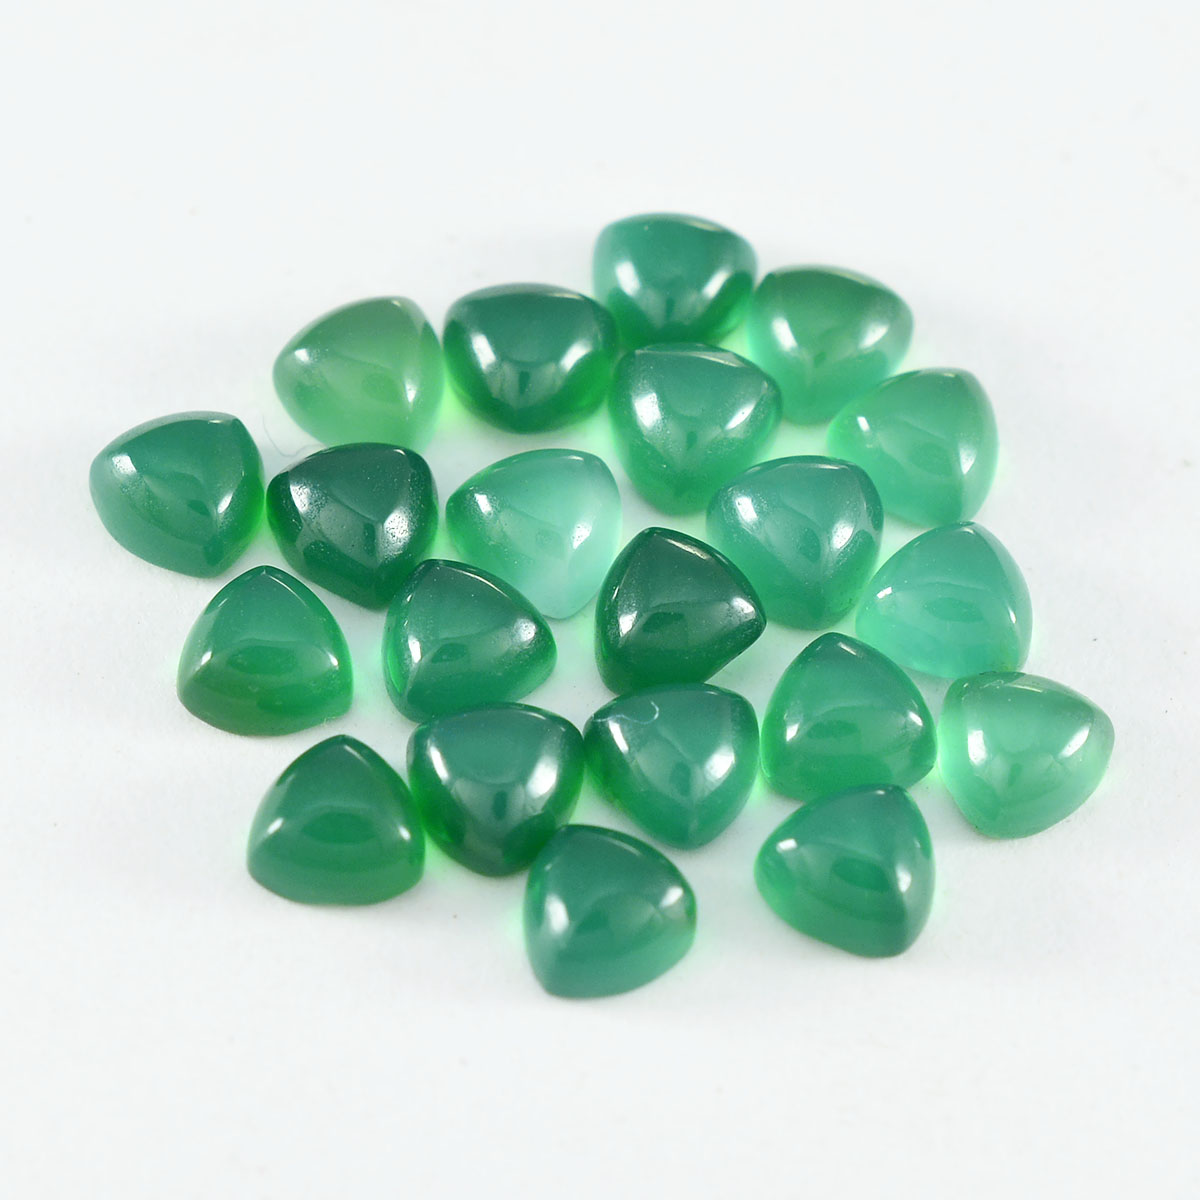 riyogems 1 st grön onyx cabochon 5x5 mm biljoner form härlig kvalitetspärla